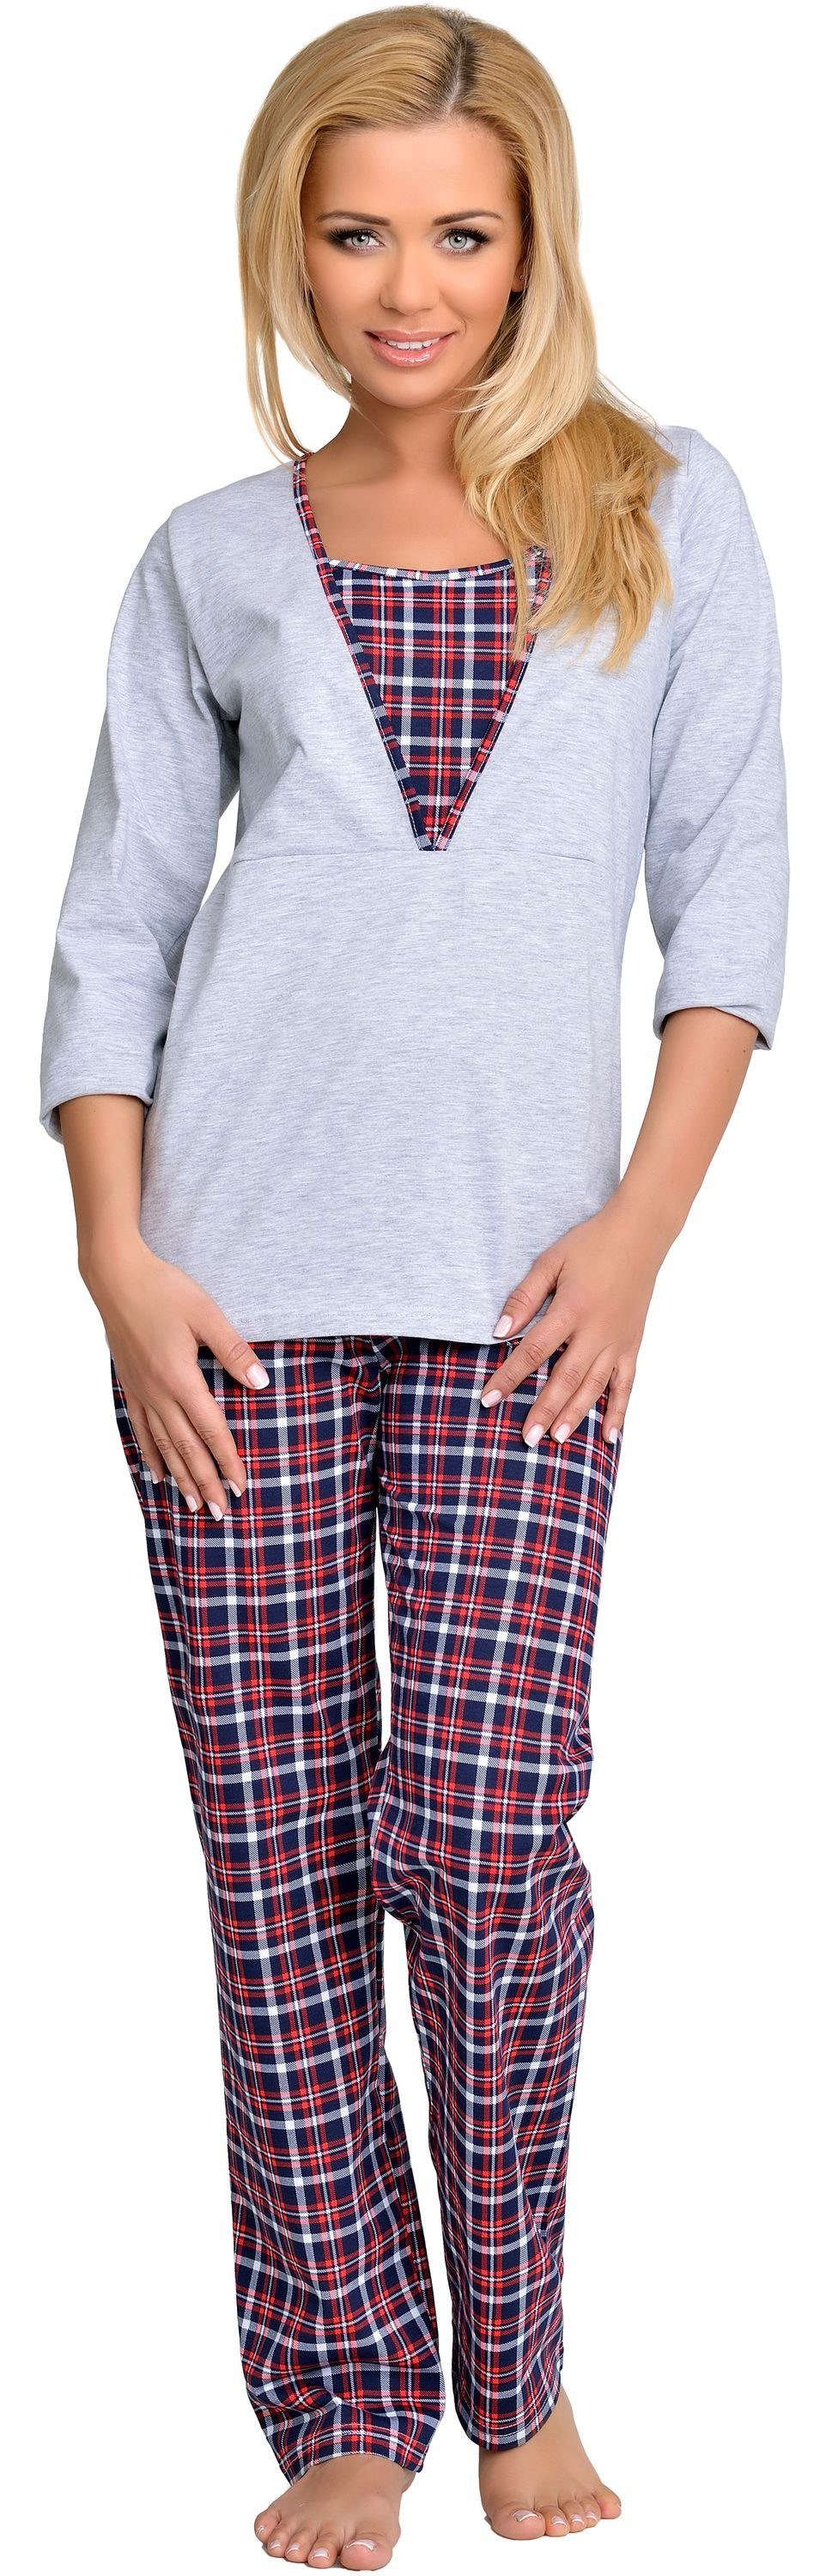 Be Mammy Umstandspyjama Damen Schlafanzug Stillpyjama 1N2TT2